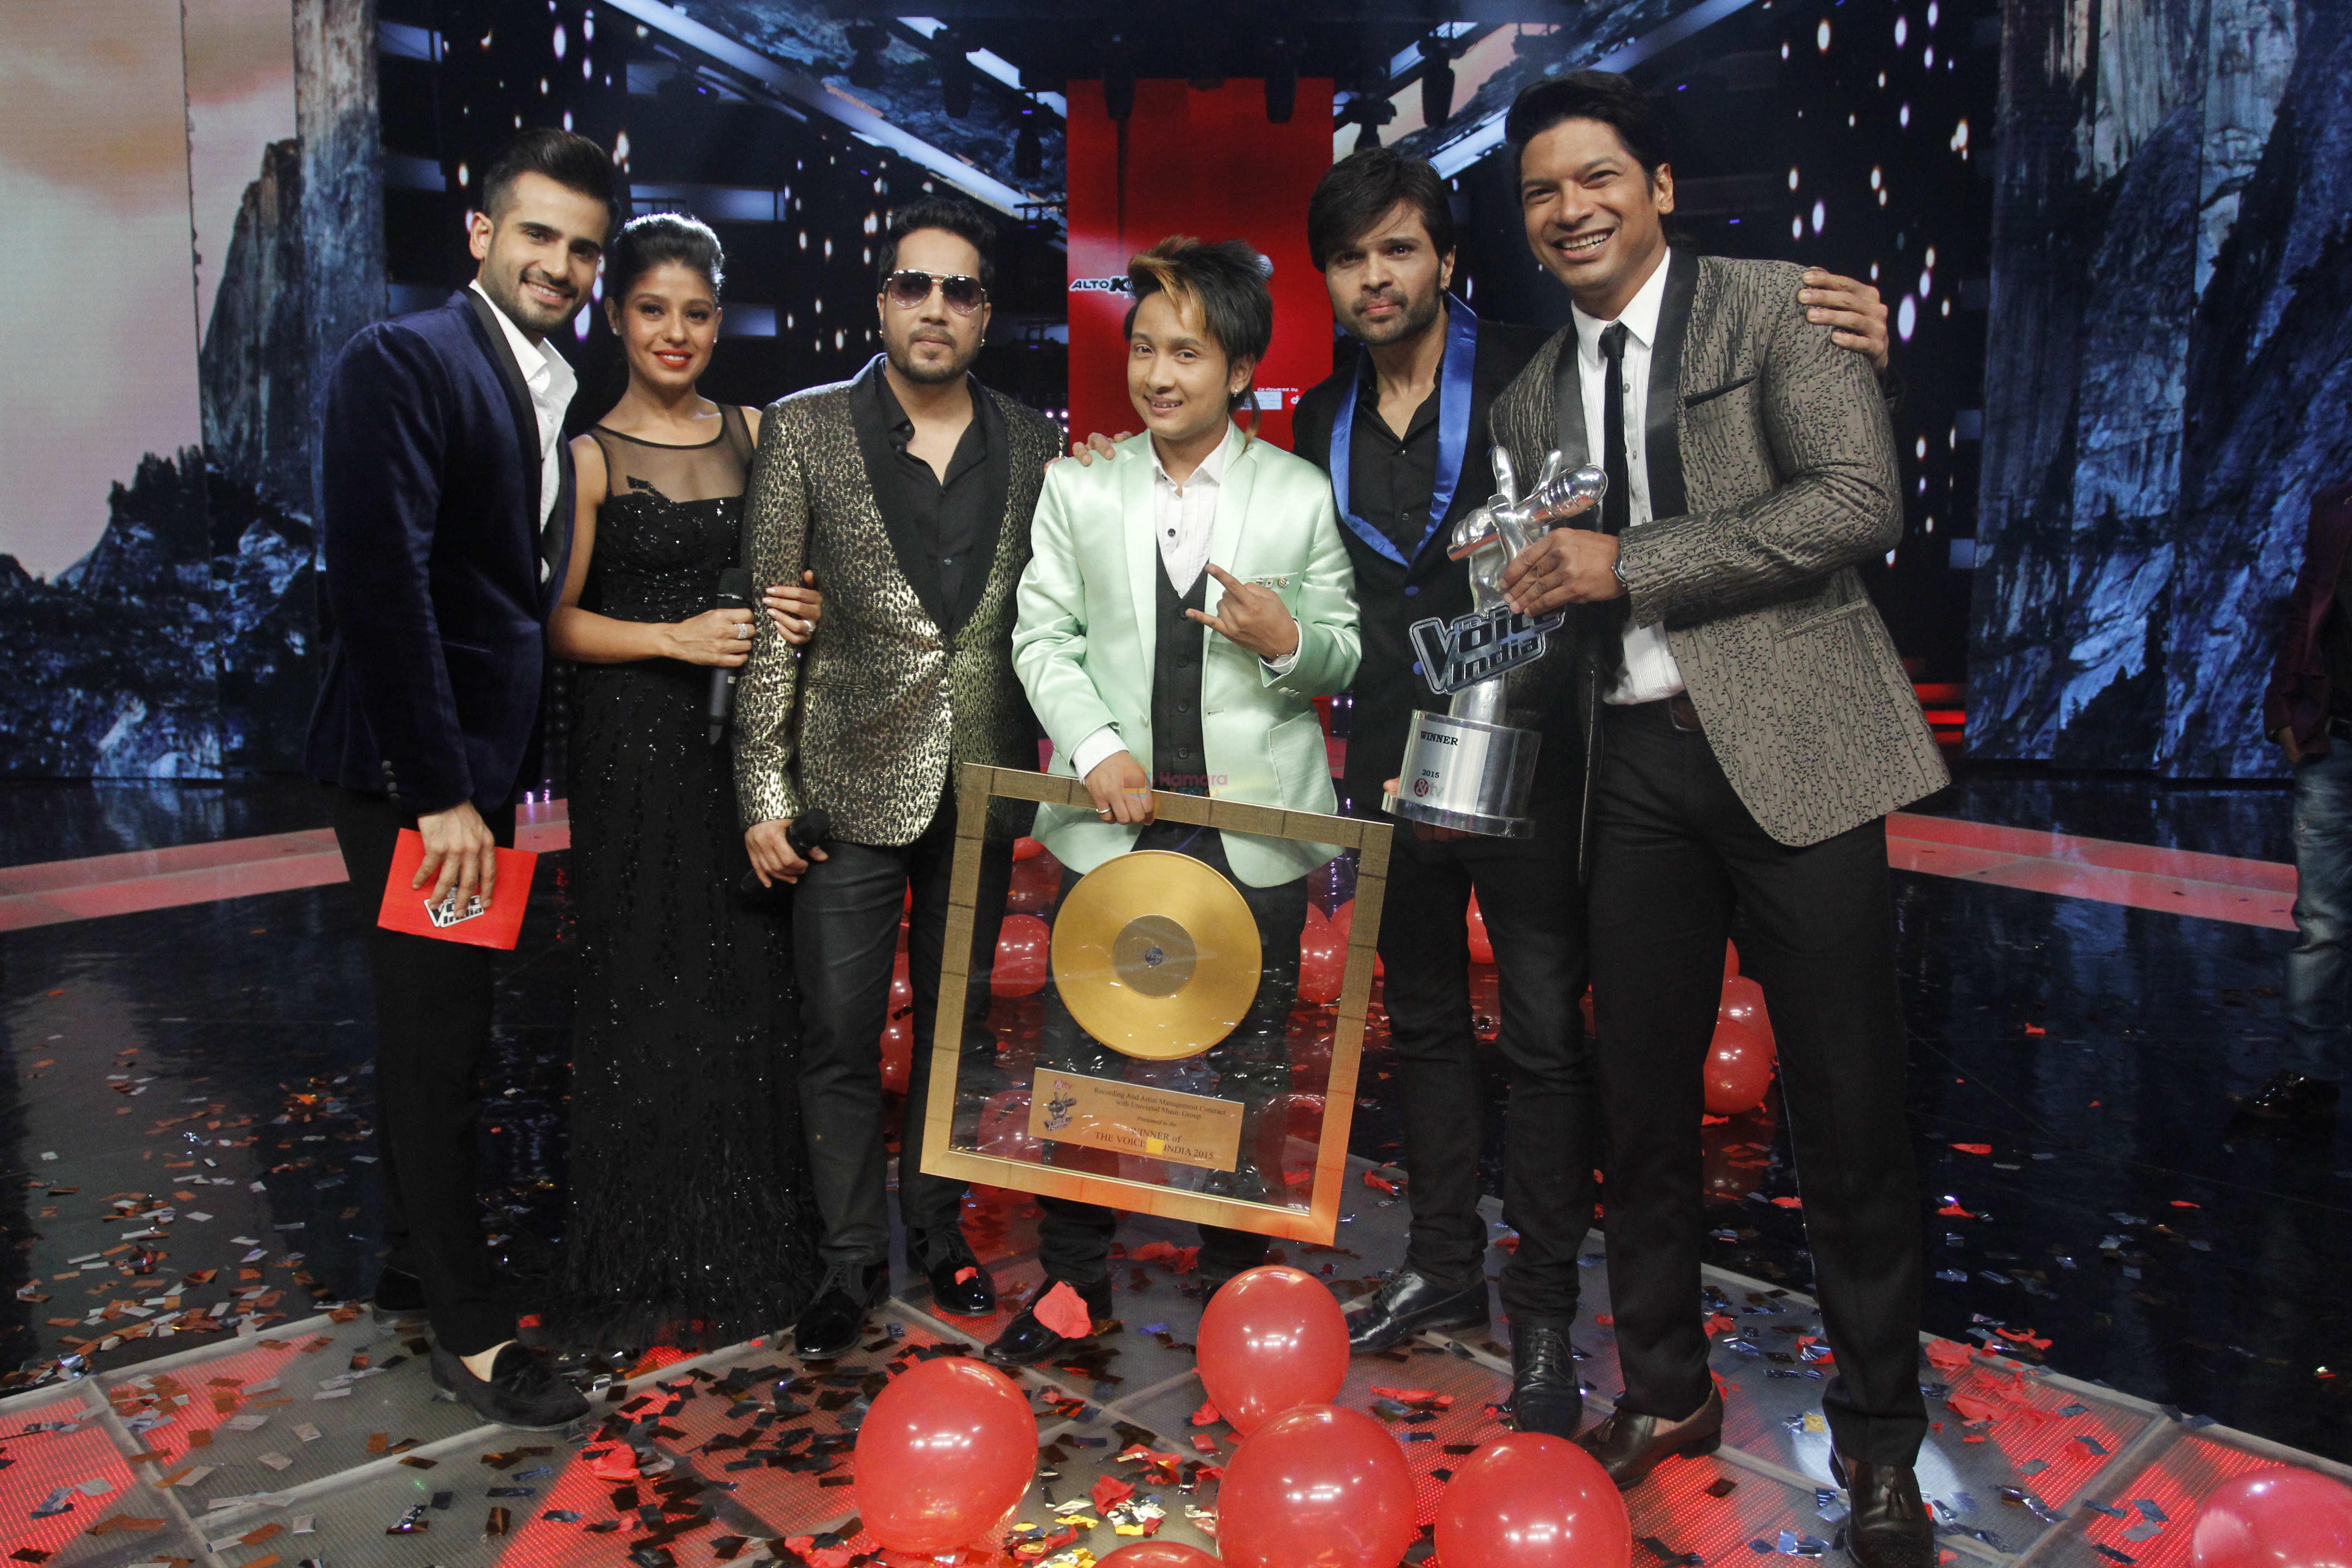 Pawandeep Rajan, Winner of &TV's The Voice India